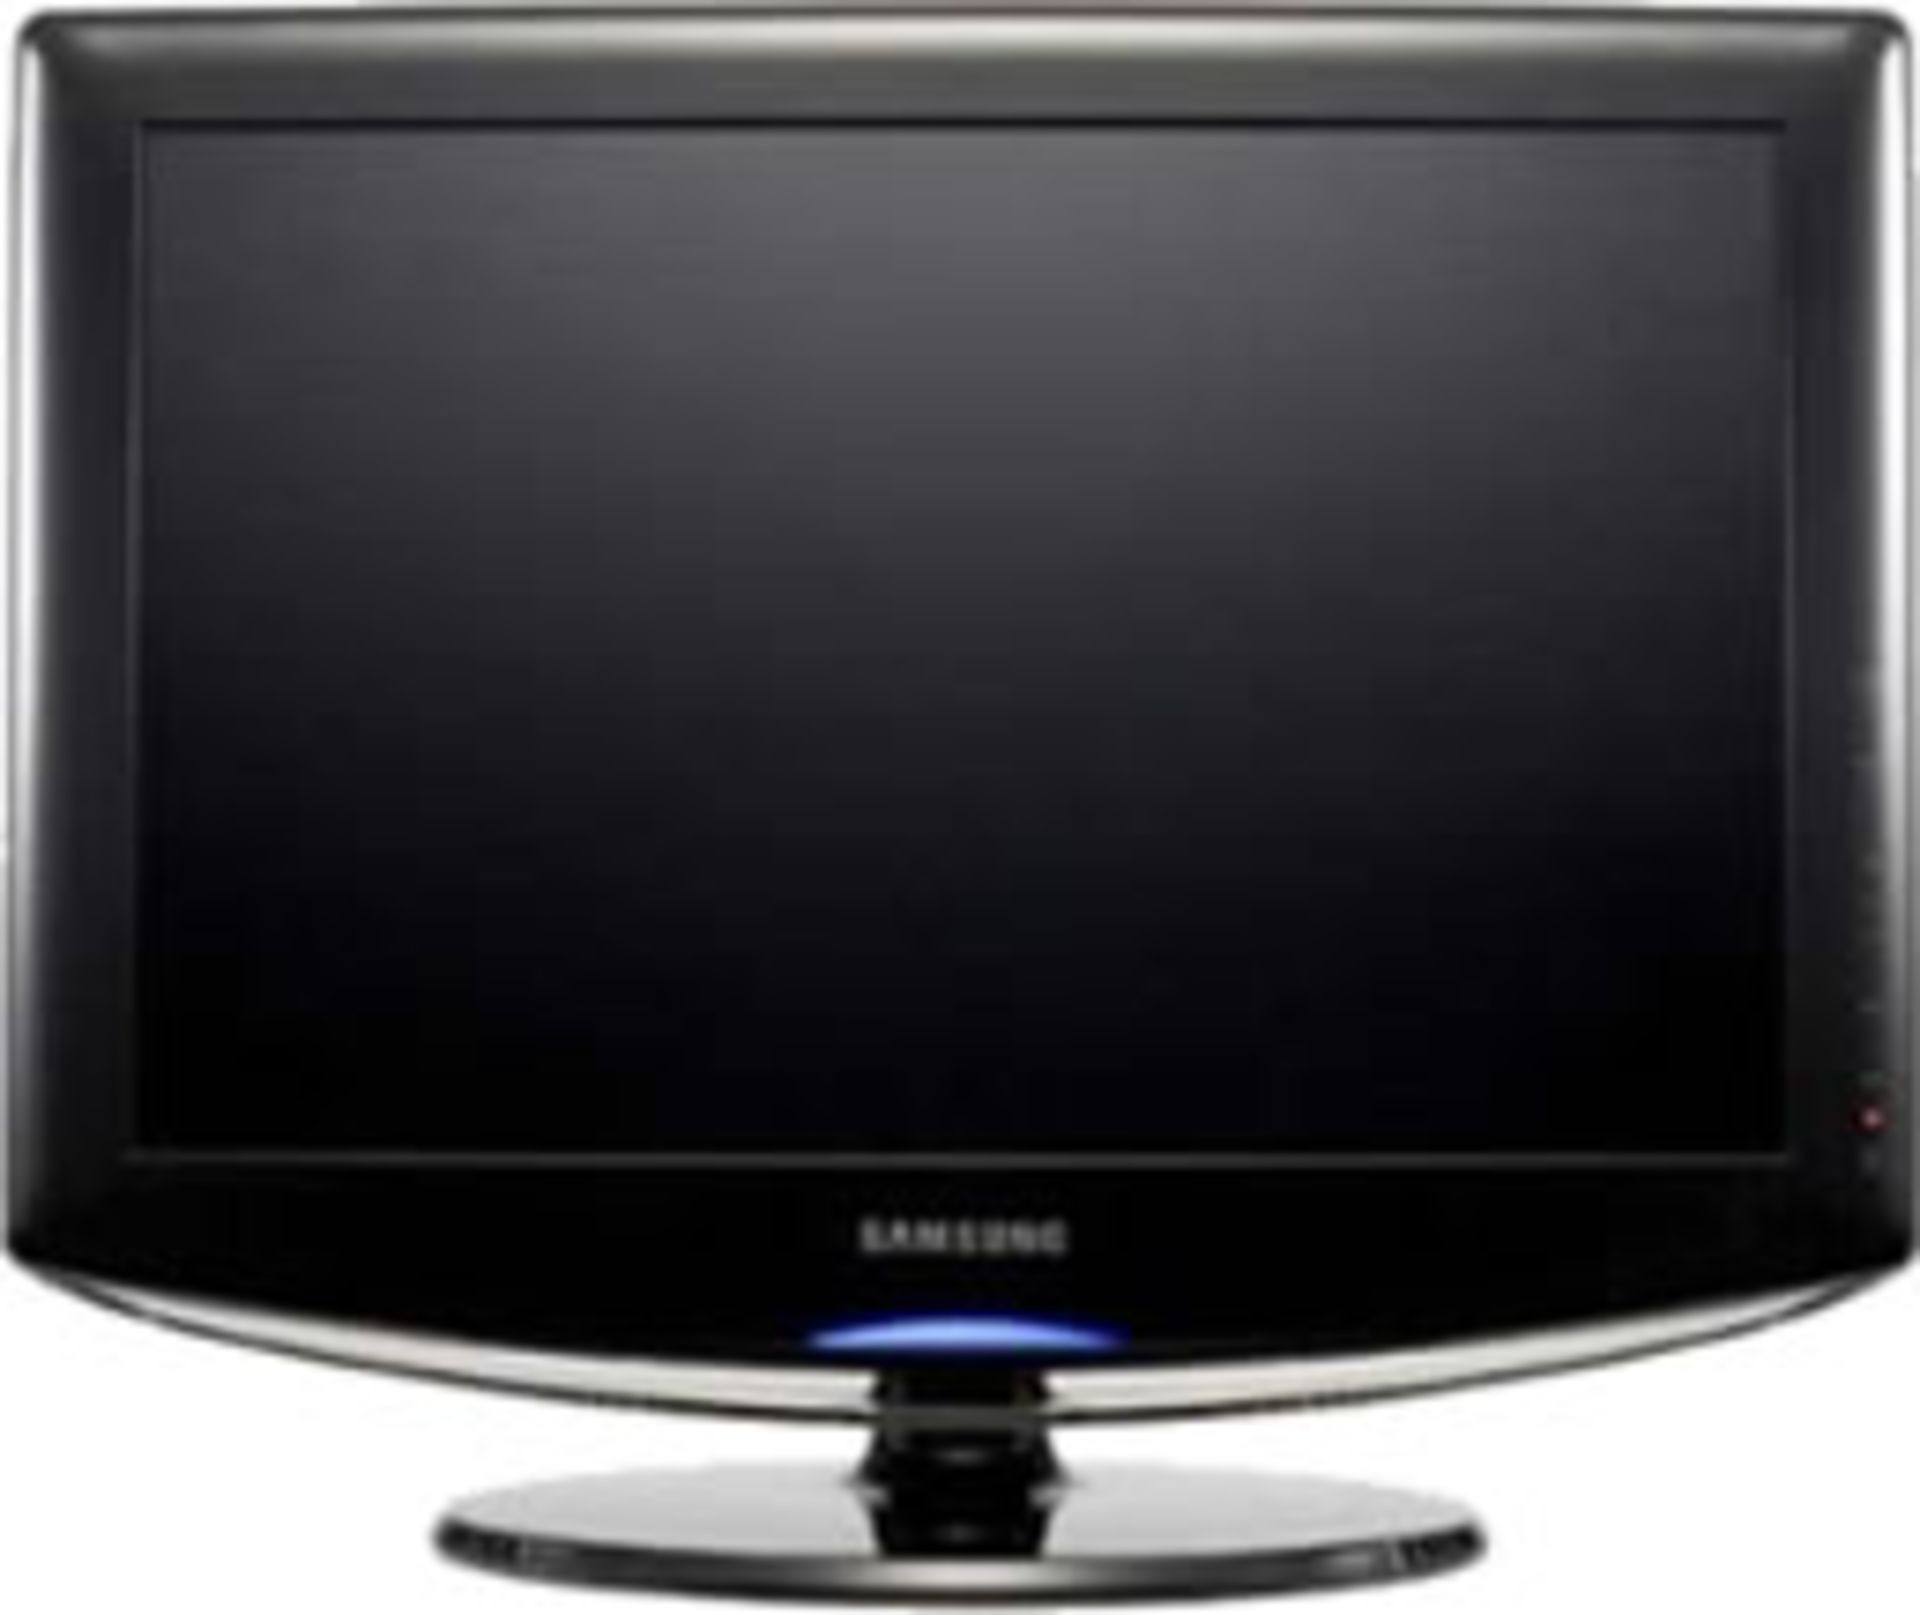 Grade U Samsung LCD TV 19 Inch With Remote & Lead